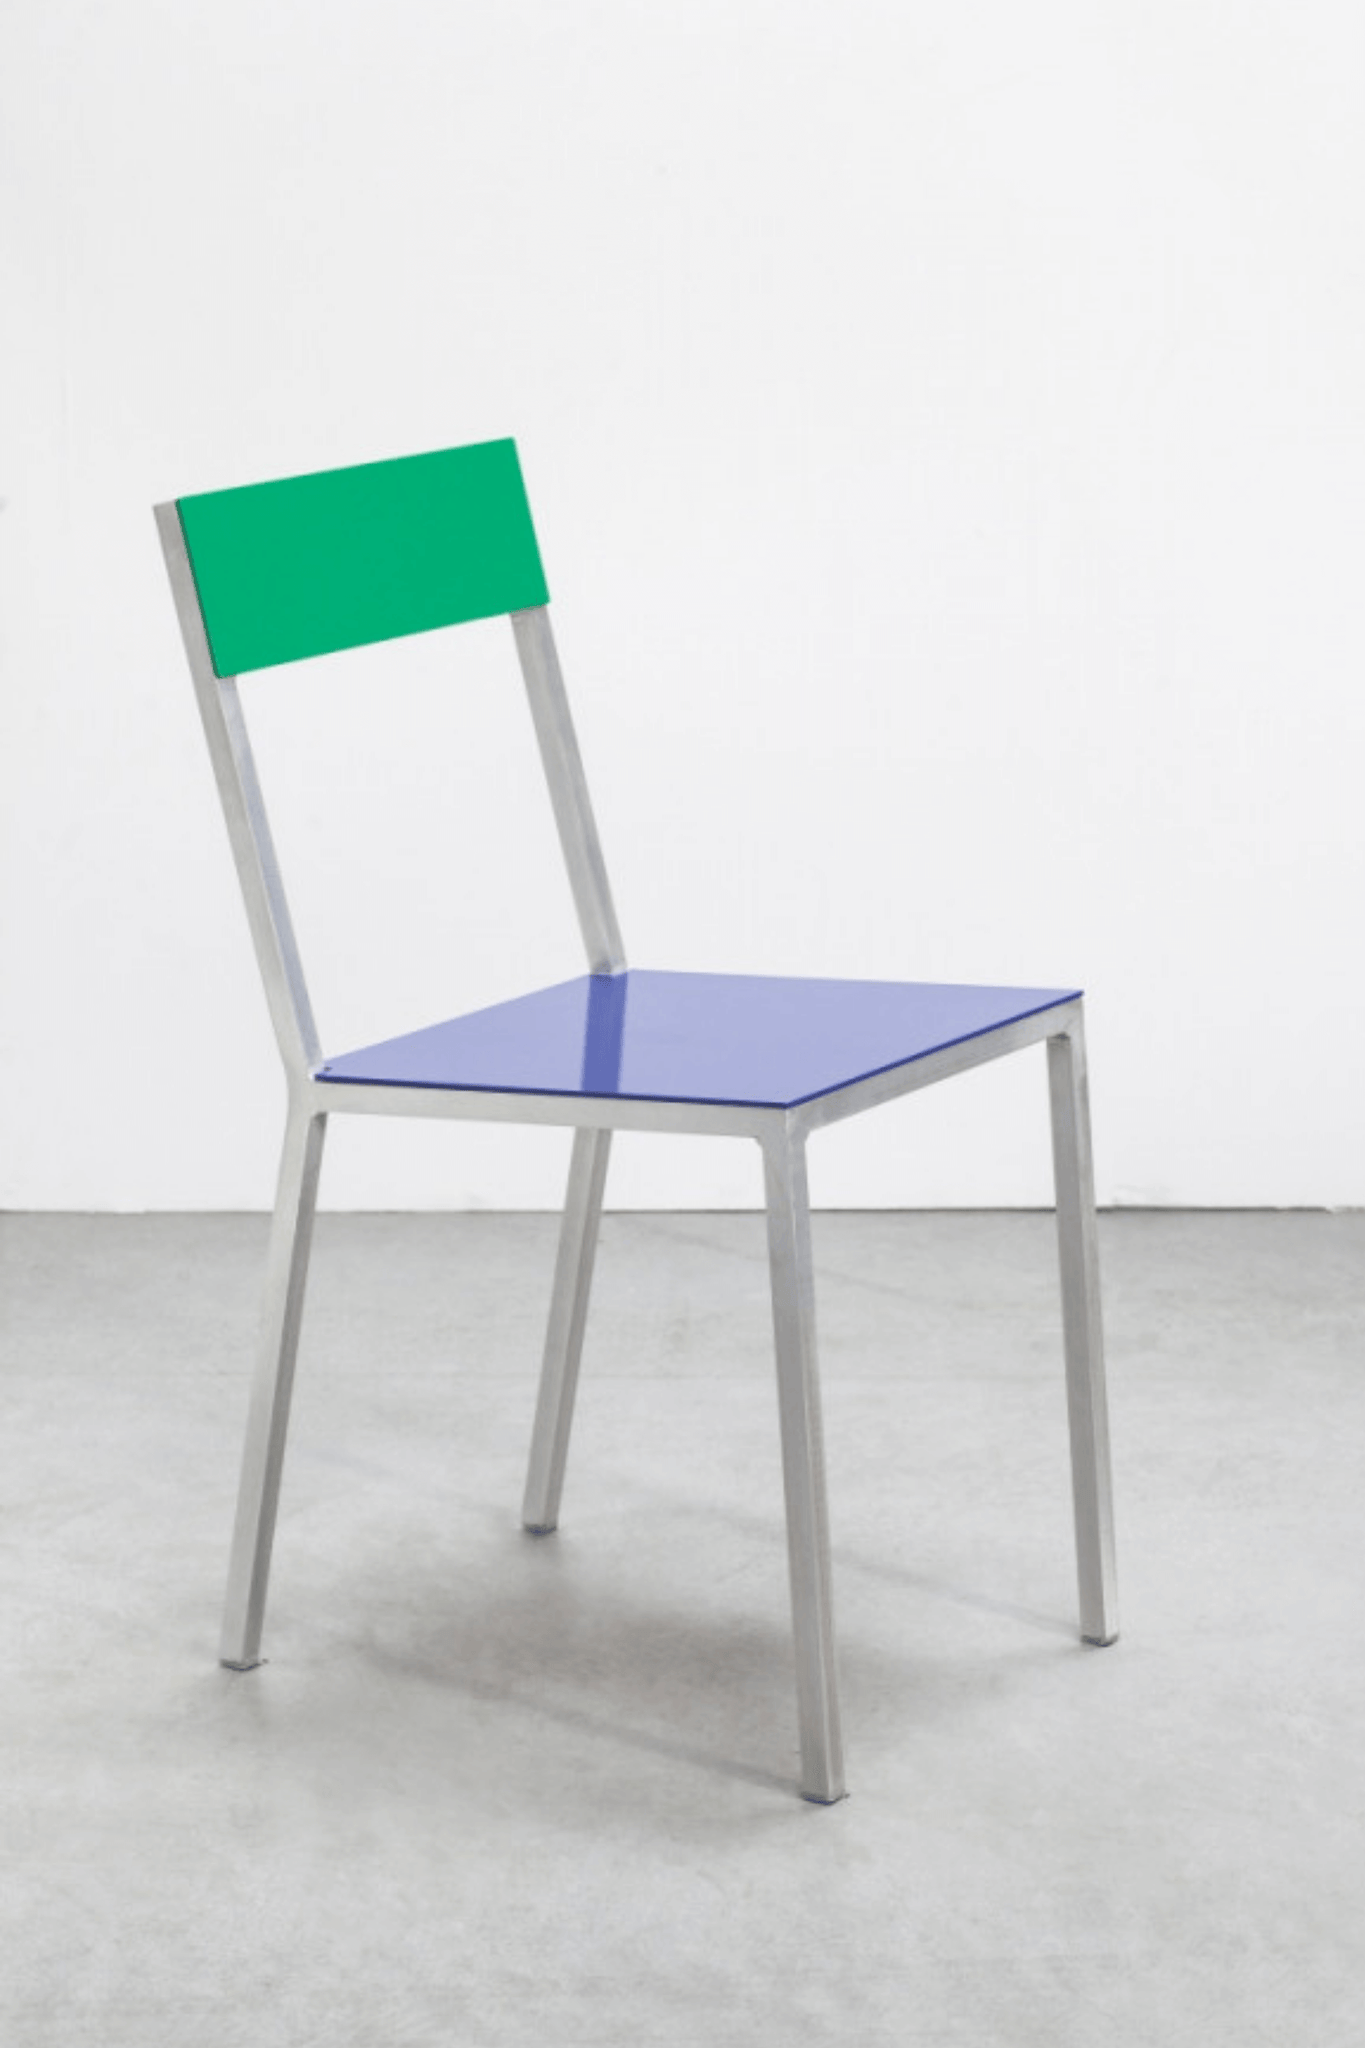 Dark Blue & Green Aluminum Alu Chair by Muller Van Severen for Valerie Objects, front angled view